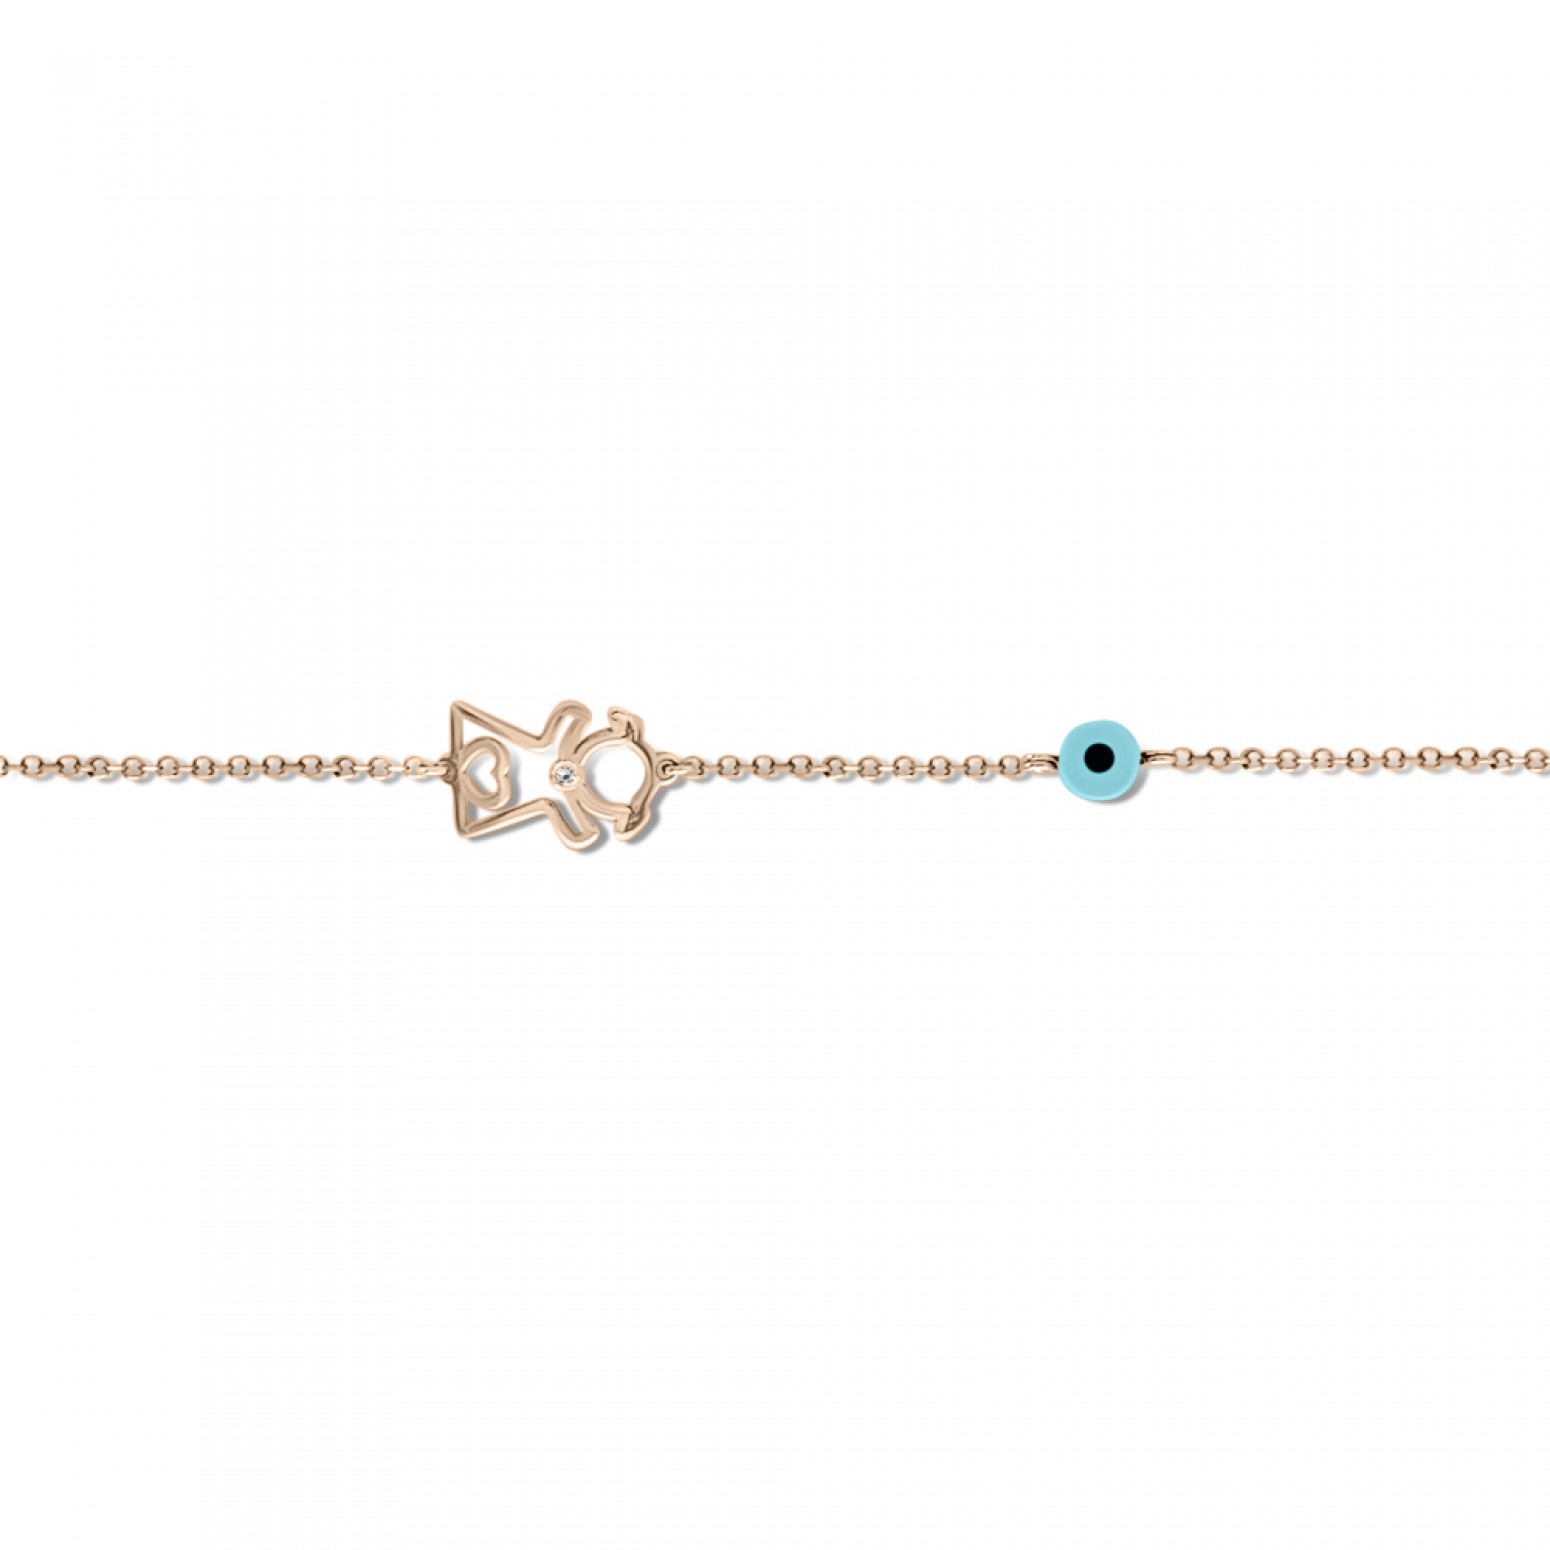 Babies bracelet K14 pink gold with girl, eye and diamond 0.01ct, VS2, H pb0164 BRACELETS Κοσμηματα - chrilia.gr